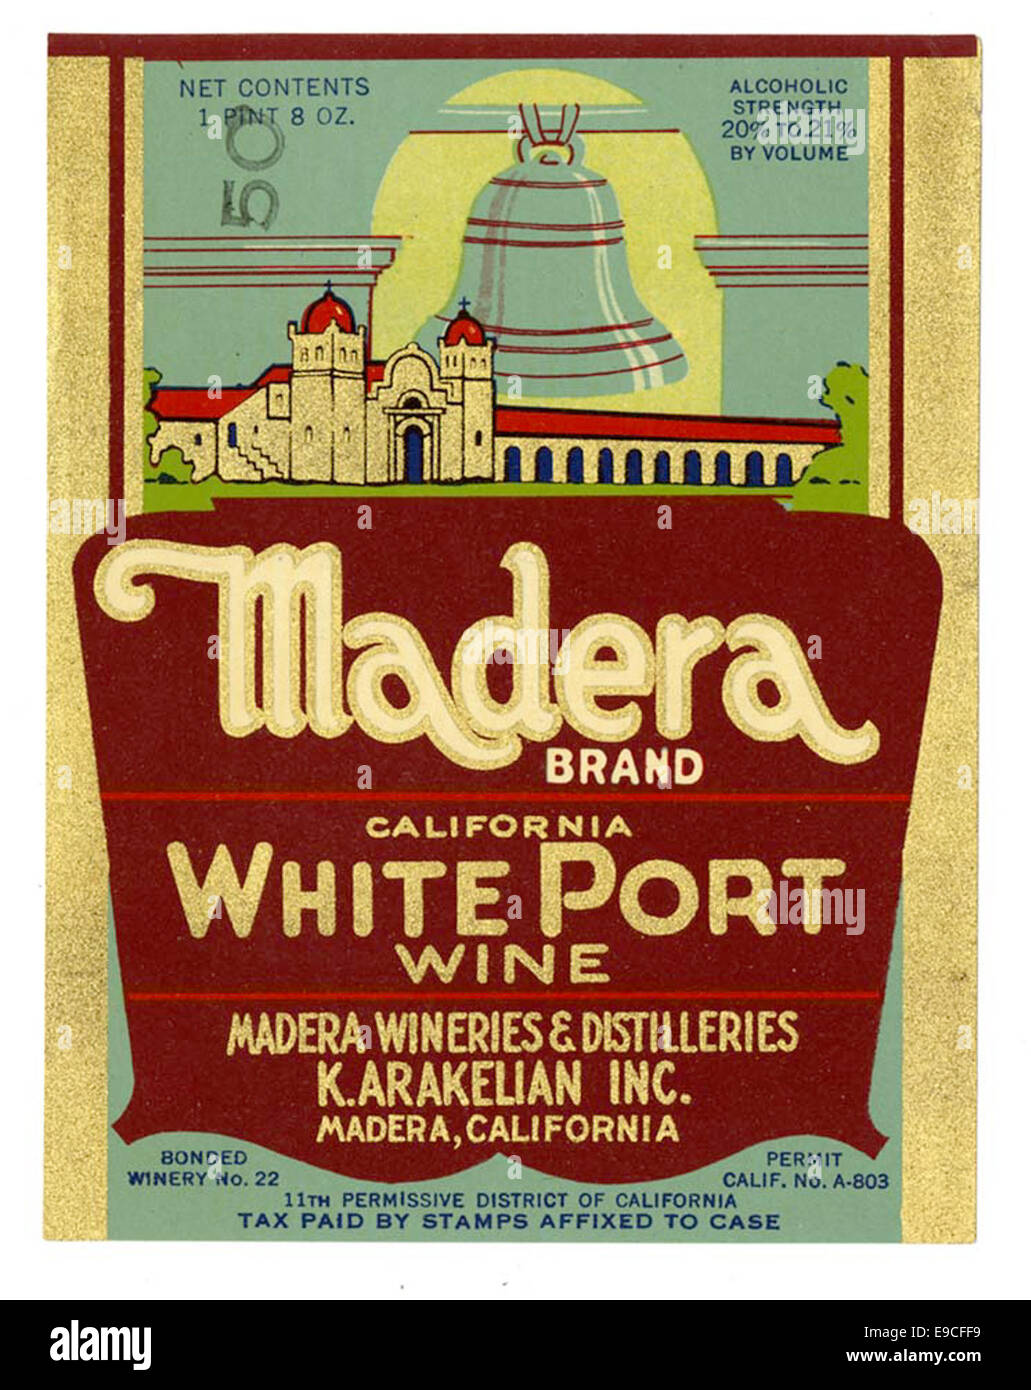 Wine label, K. Arakelian Inc., Madera Brand California White Port Wine Stock Photo